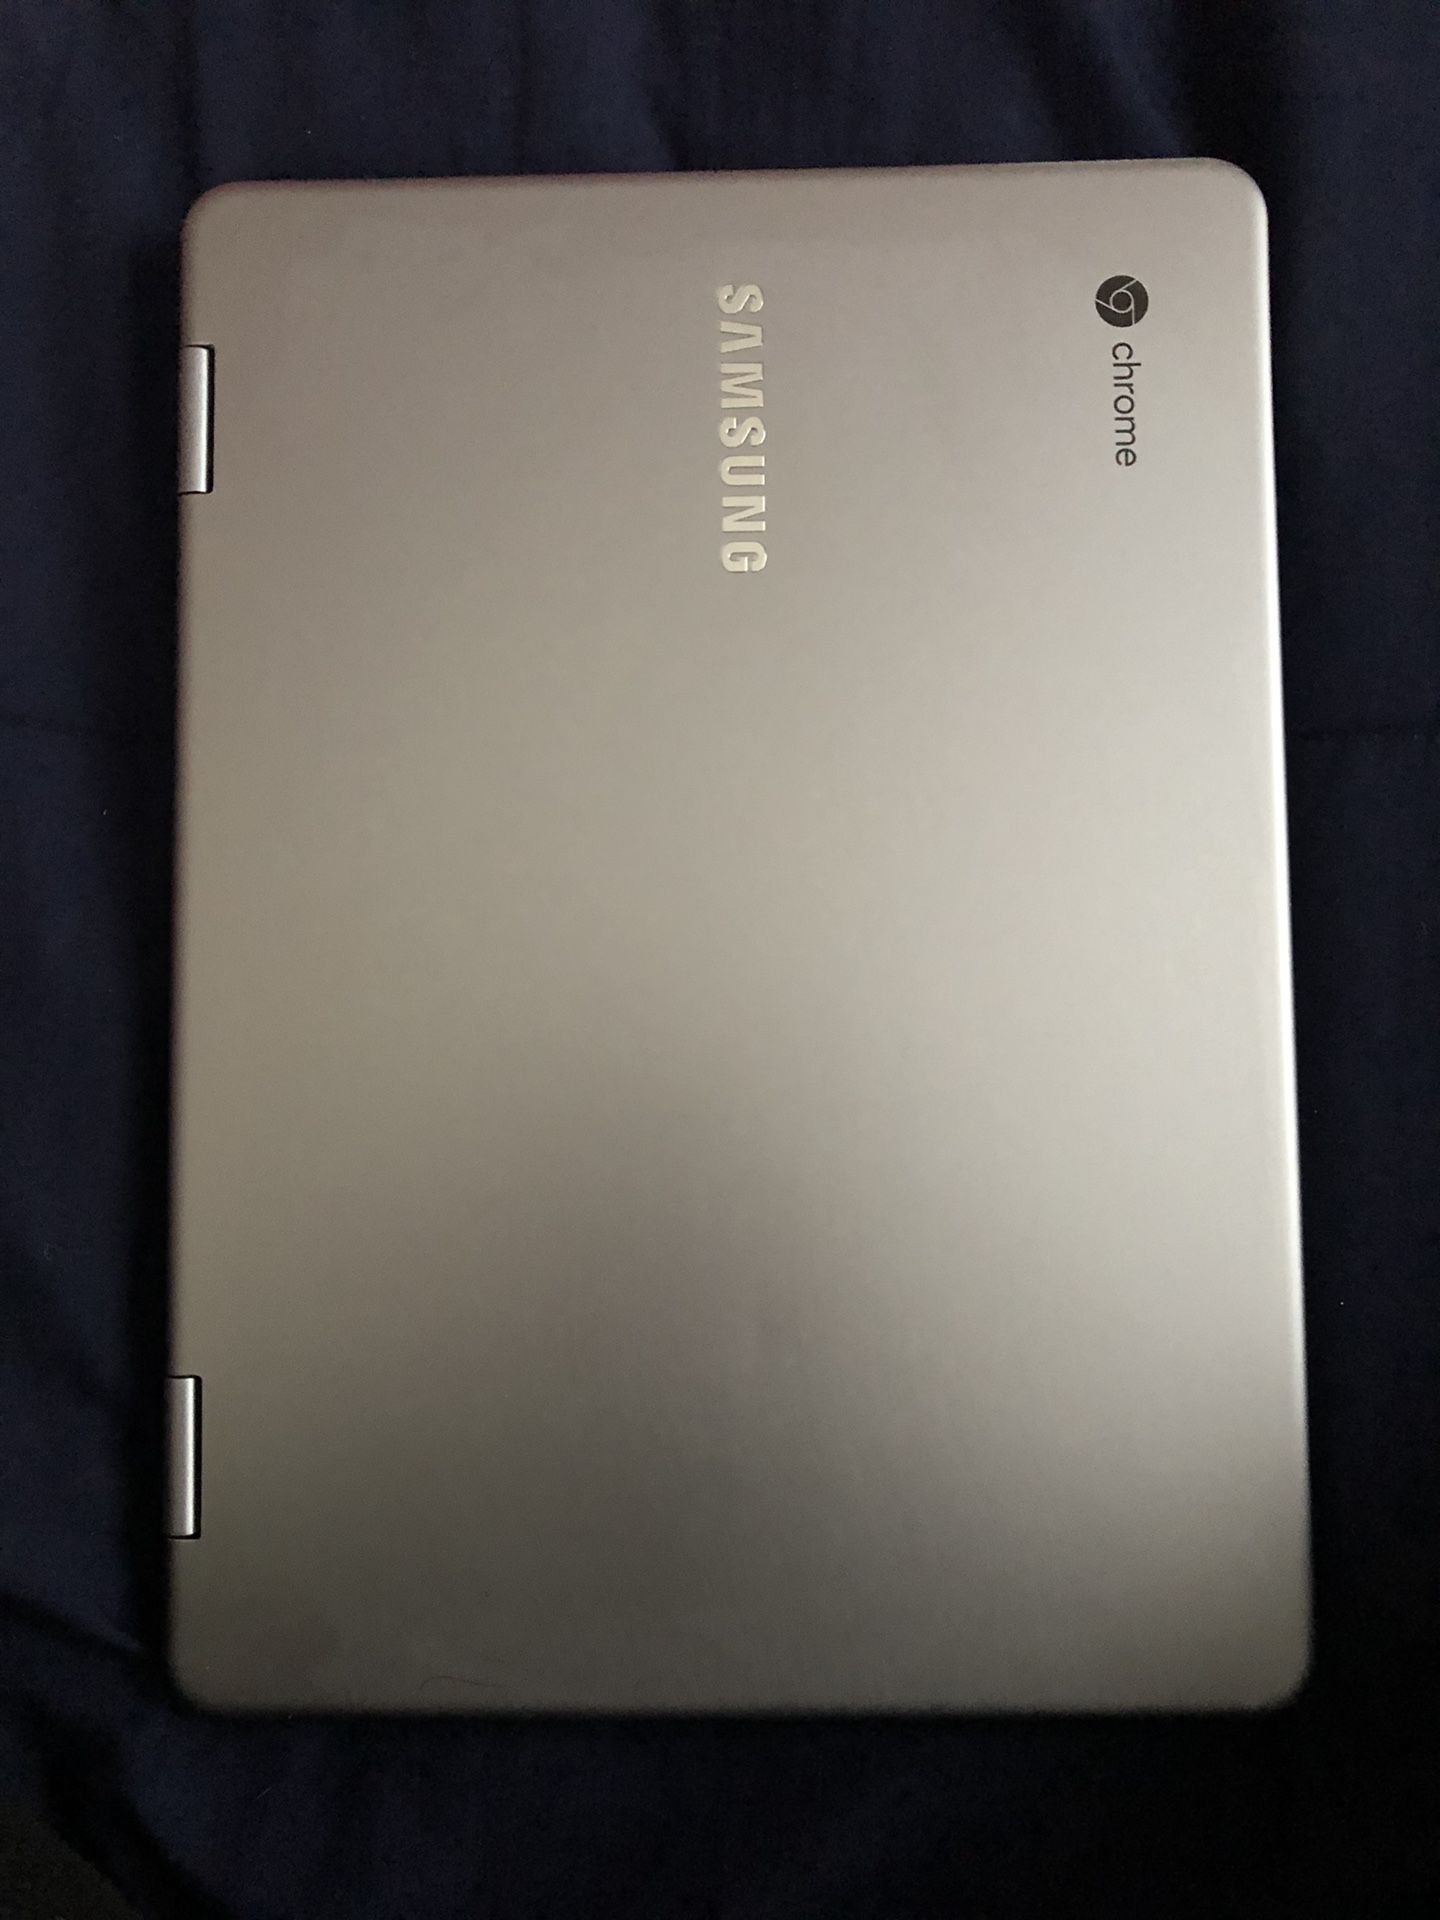 Samsung 2-in1 Touchscreen Chromebook